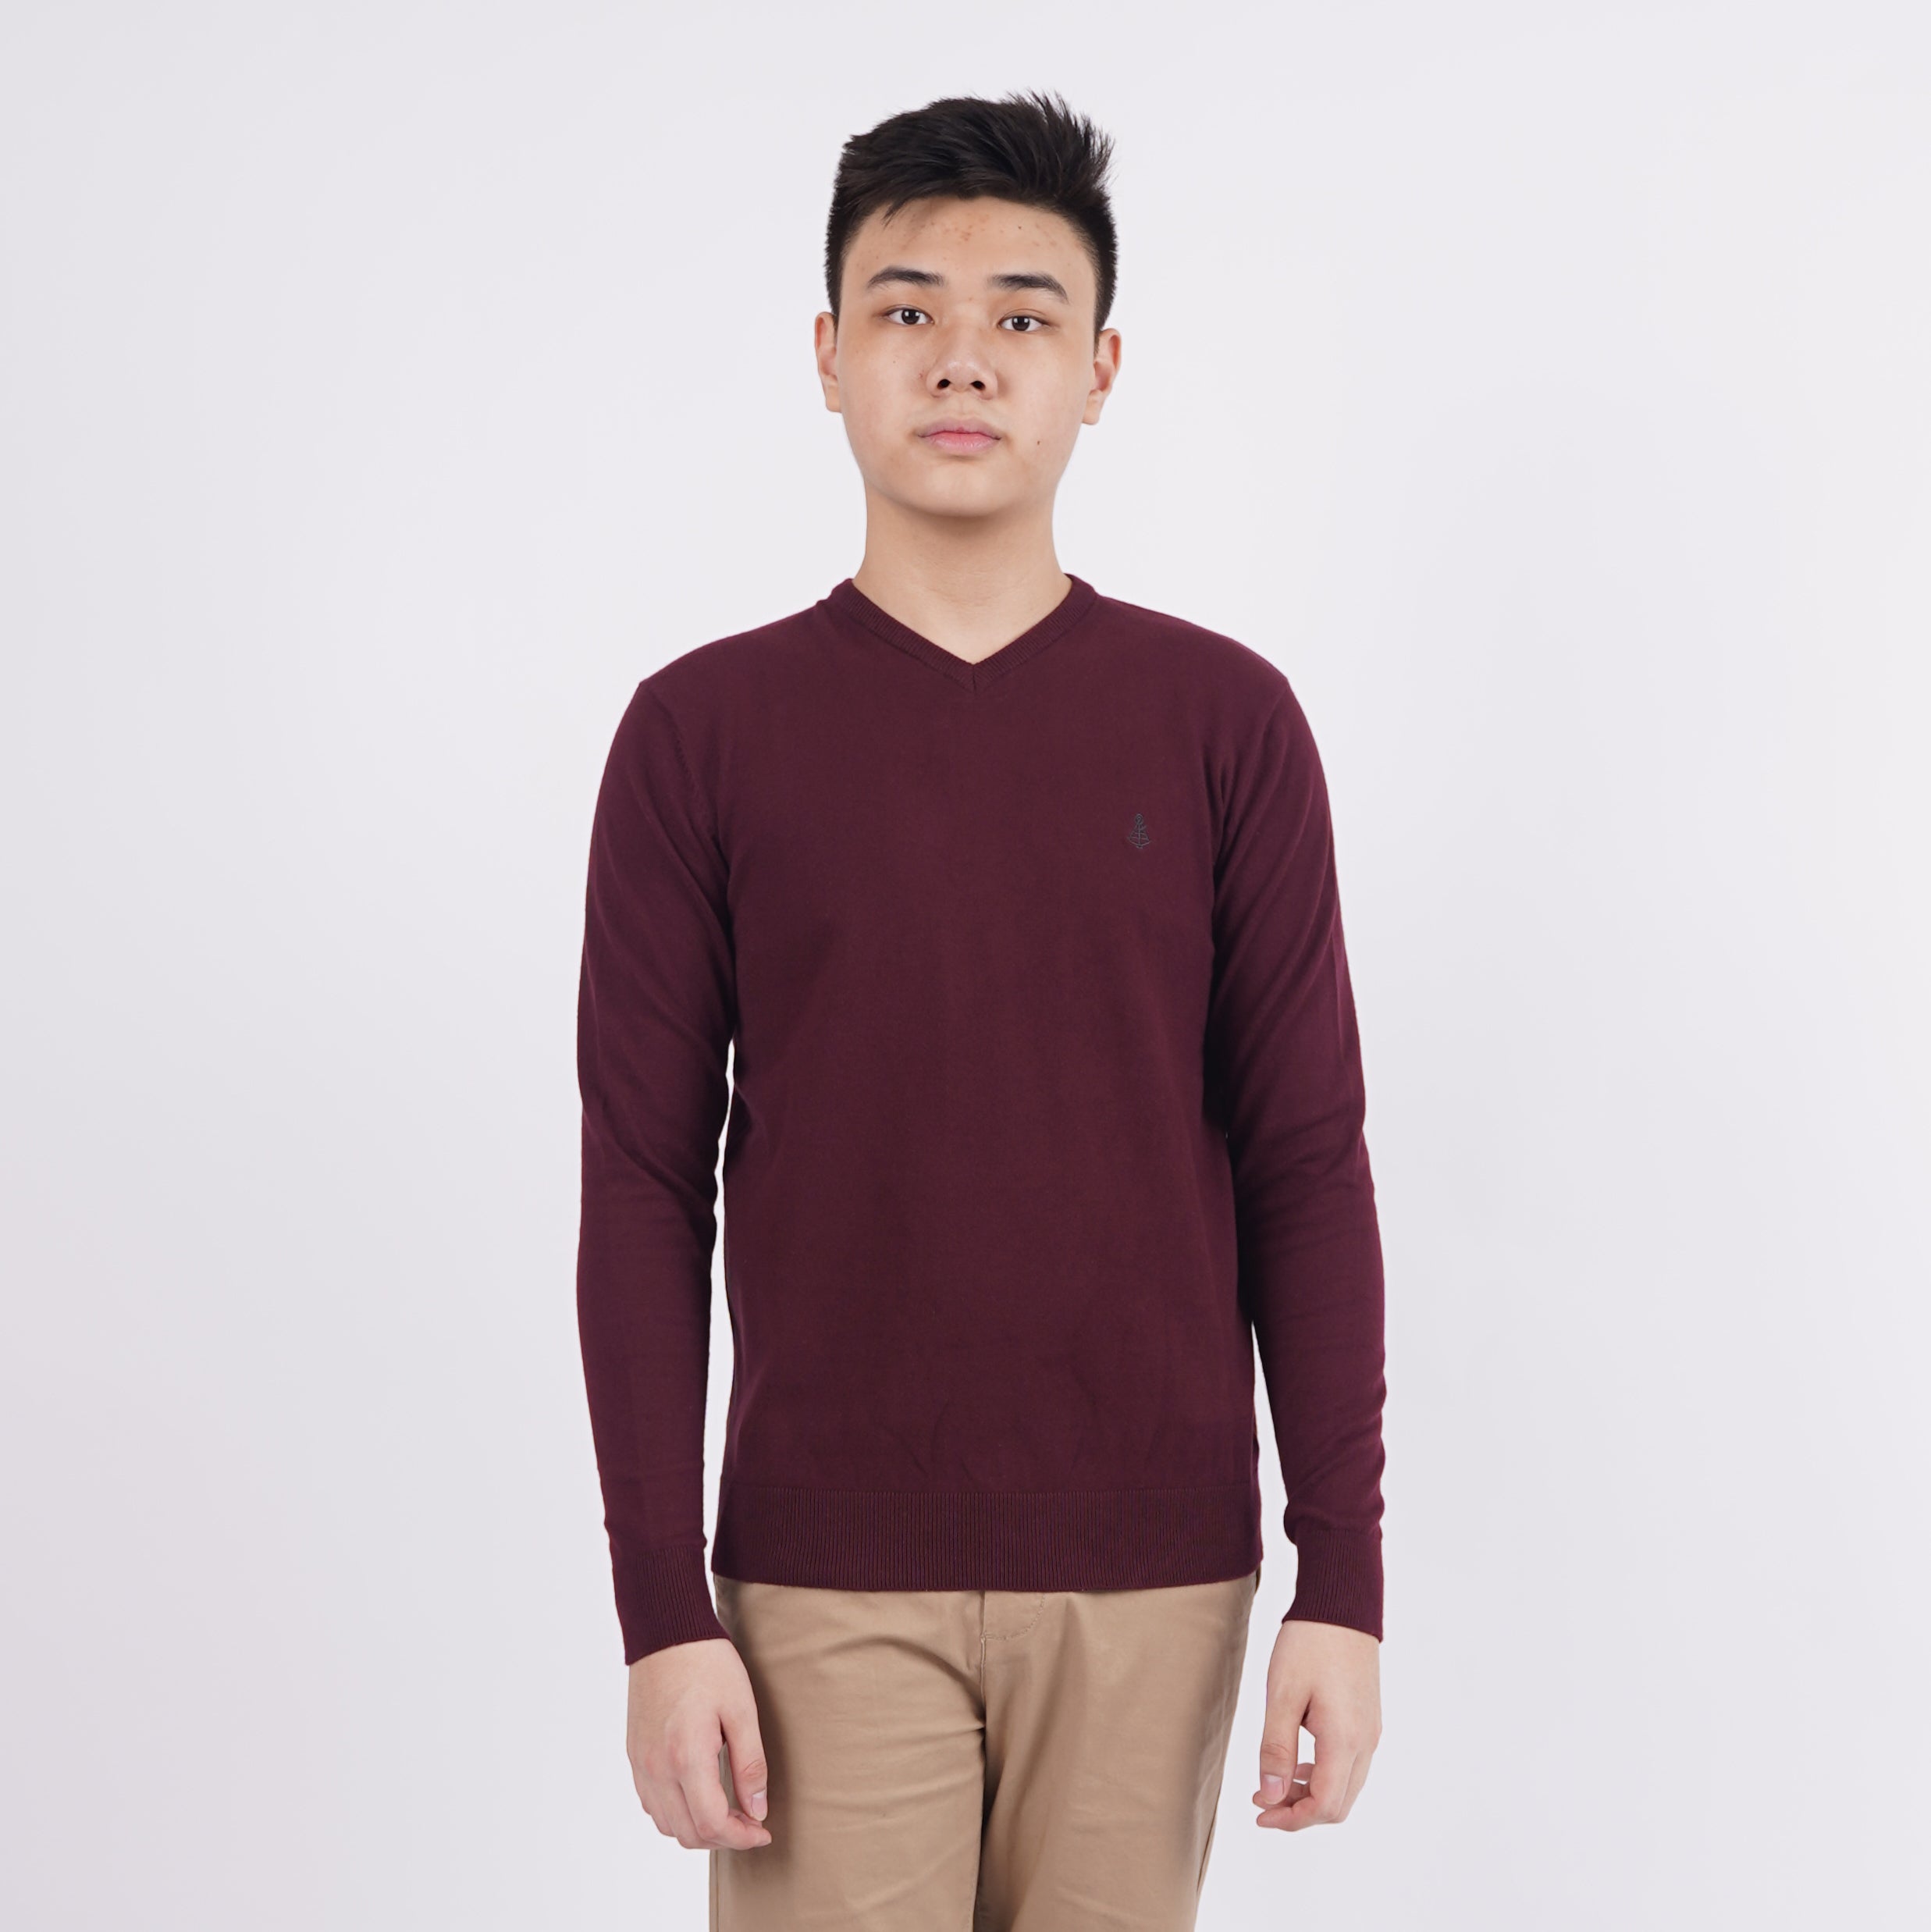 Sweatshirt Pria Kerah V-Neck Tersedia 3 Pilihan Warna [CG-EXPL 01]